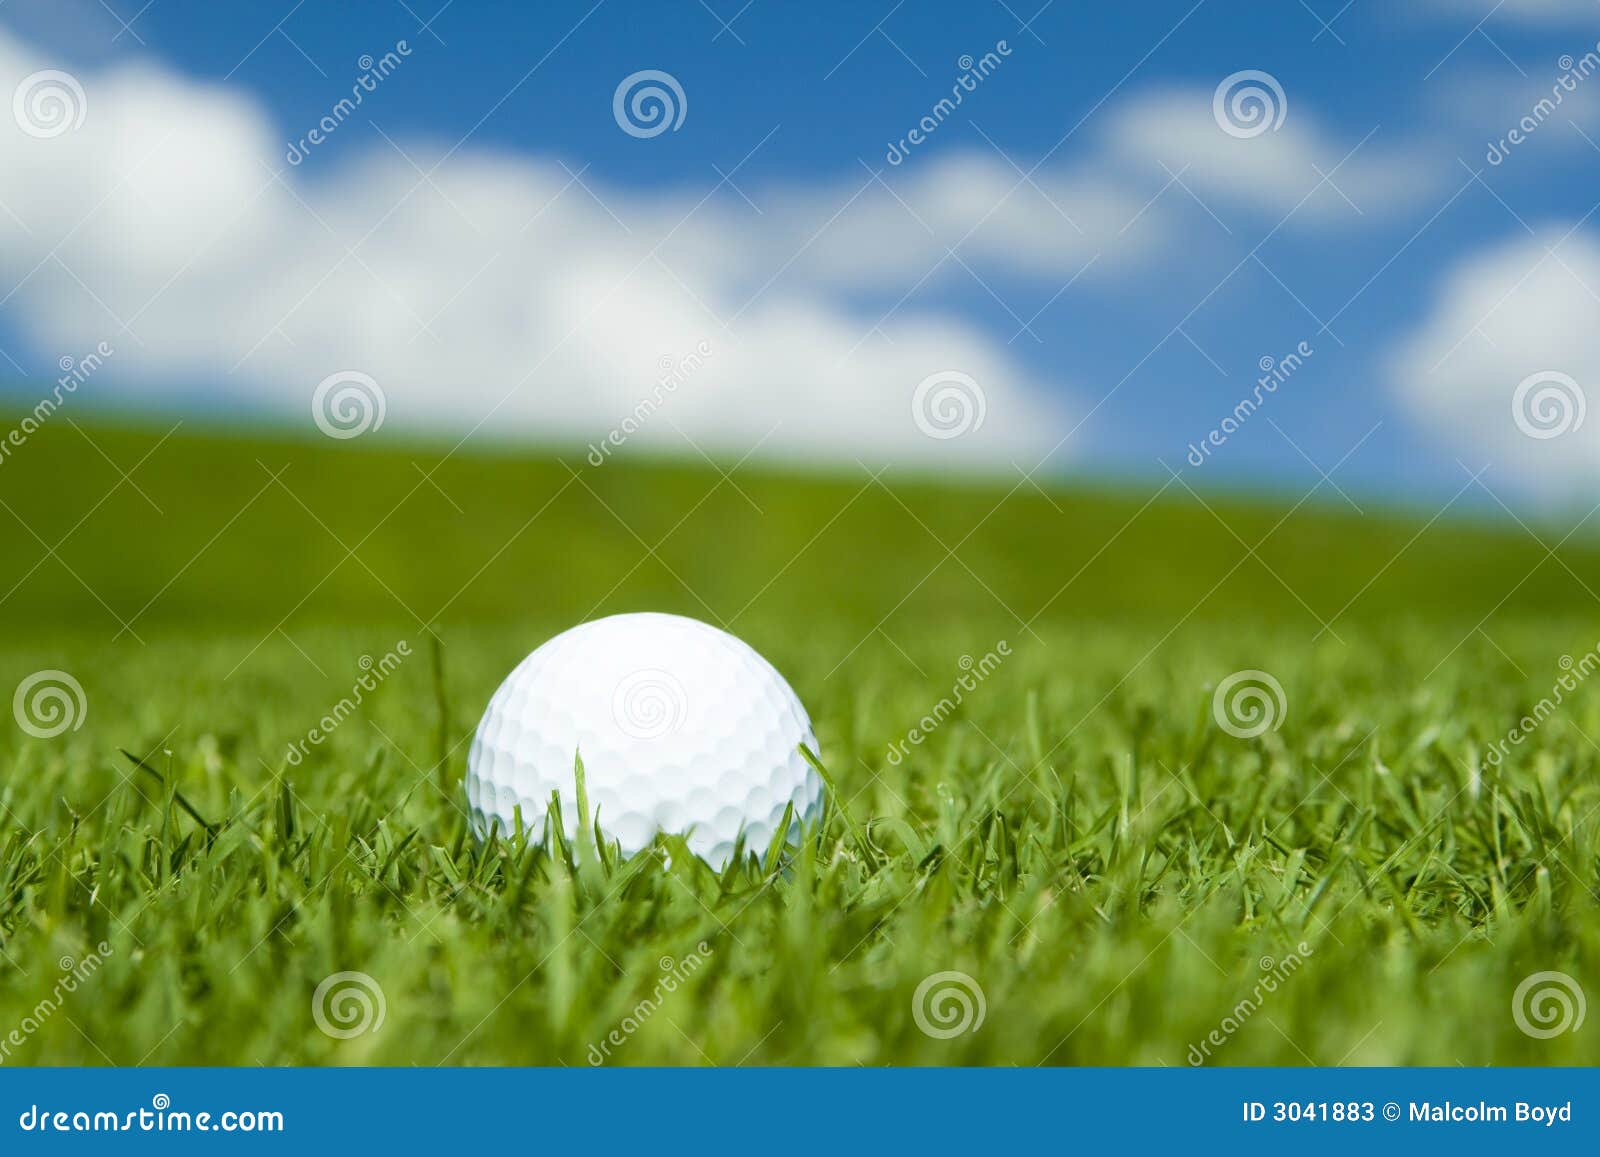 golf ball on green fairway